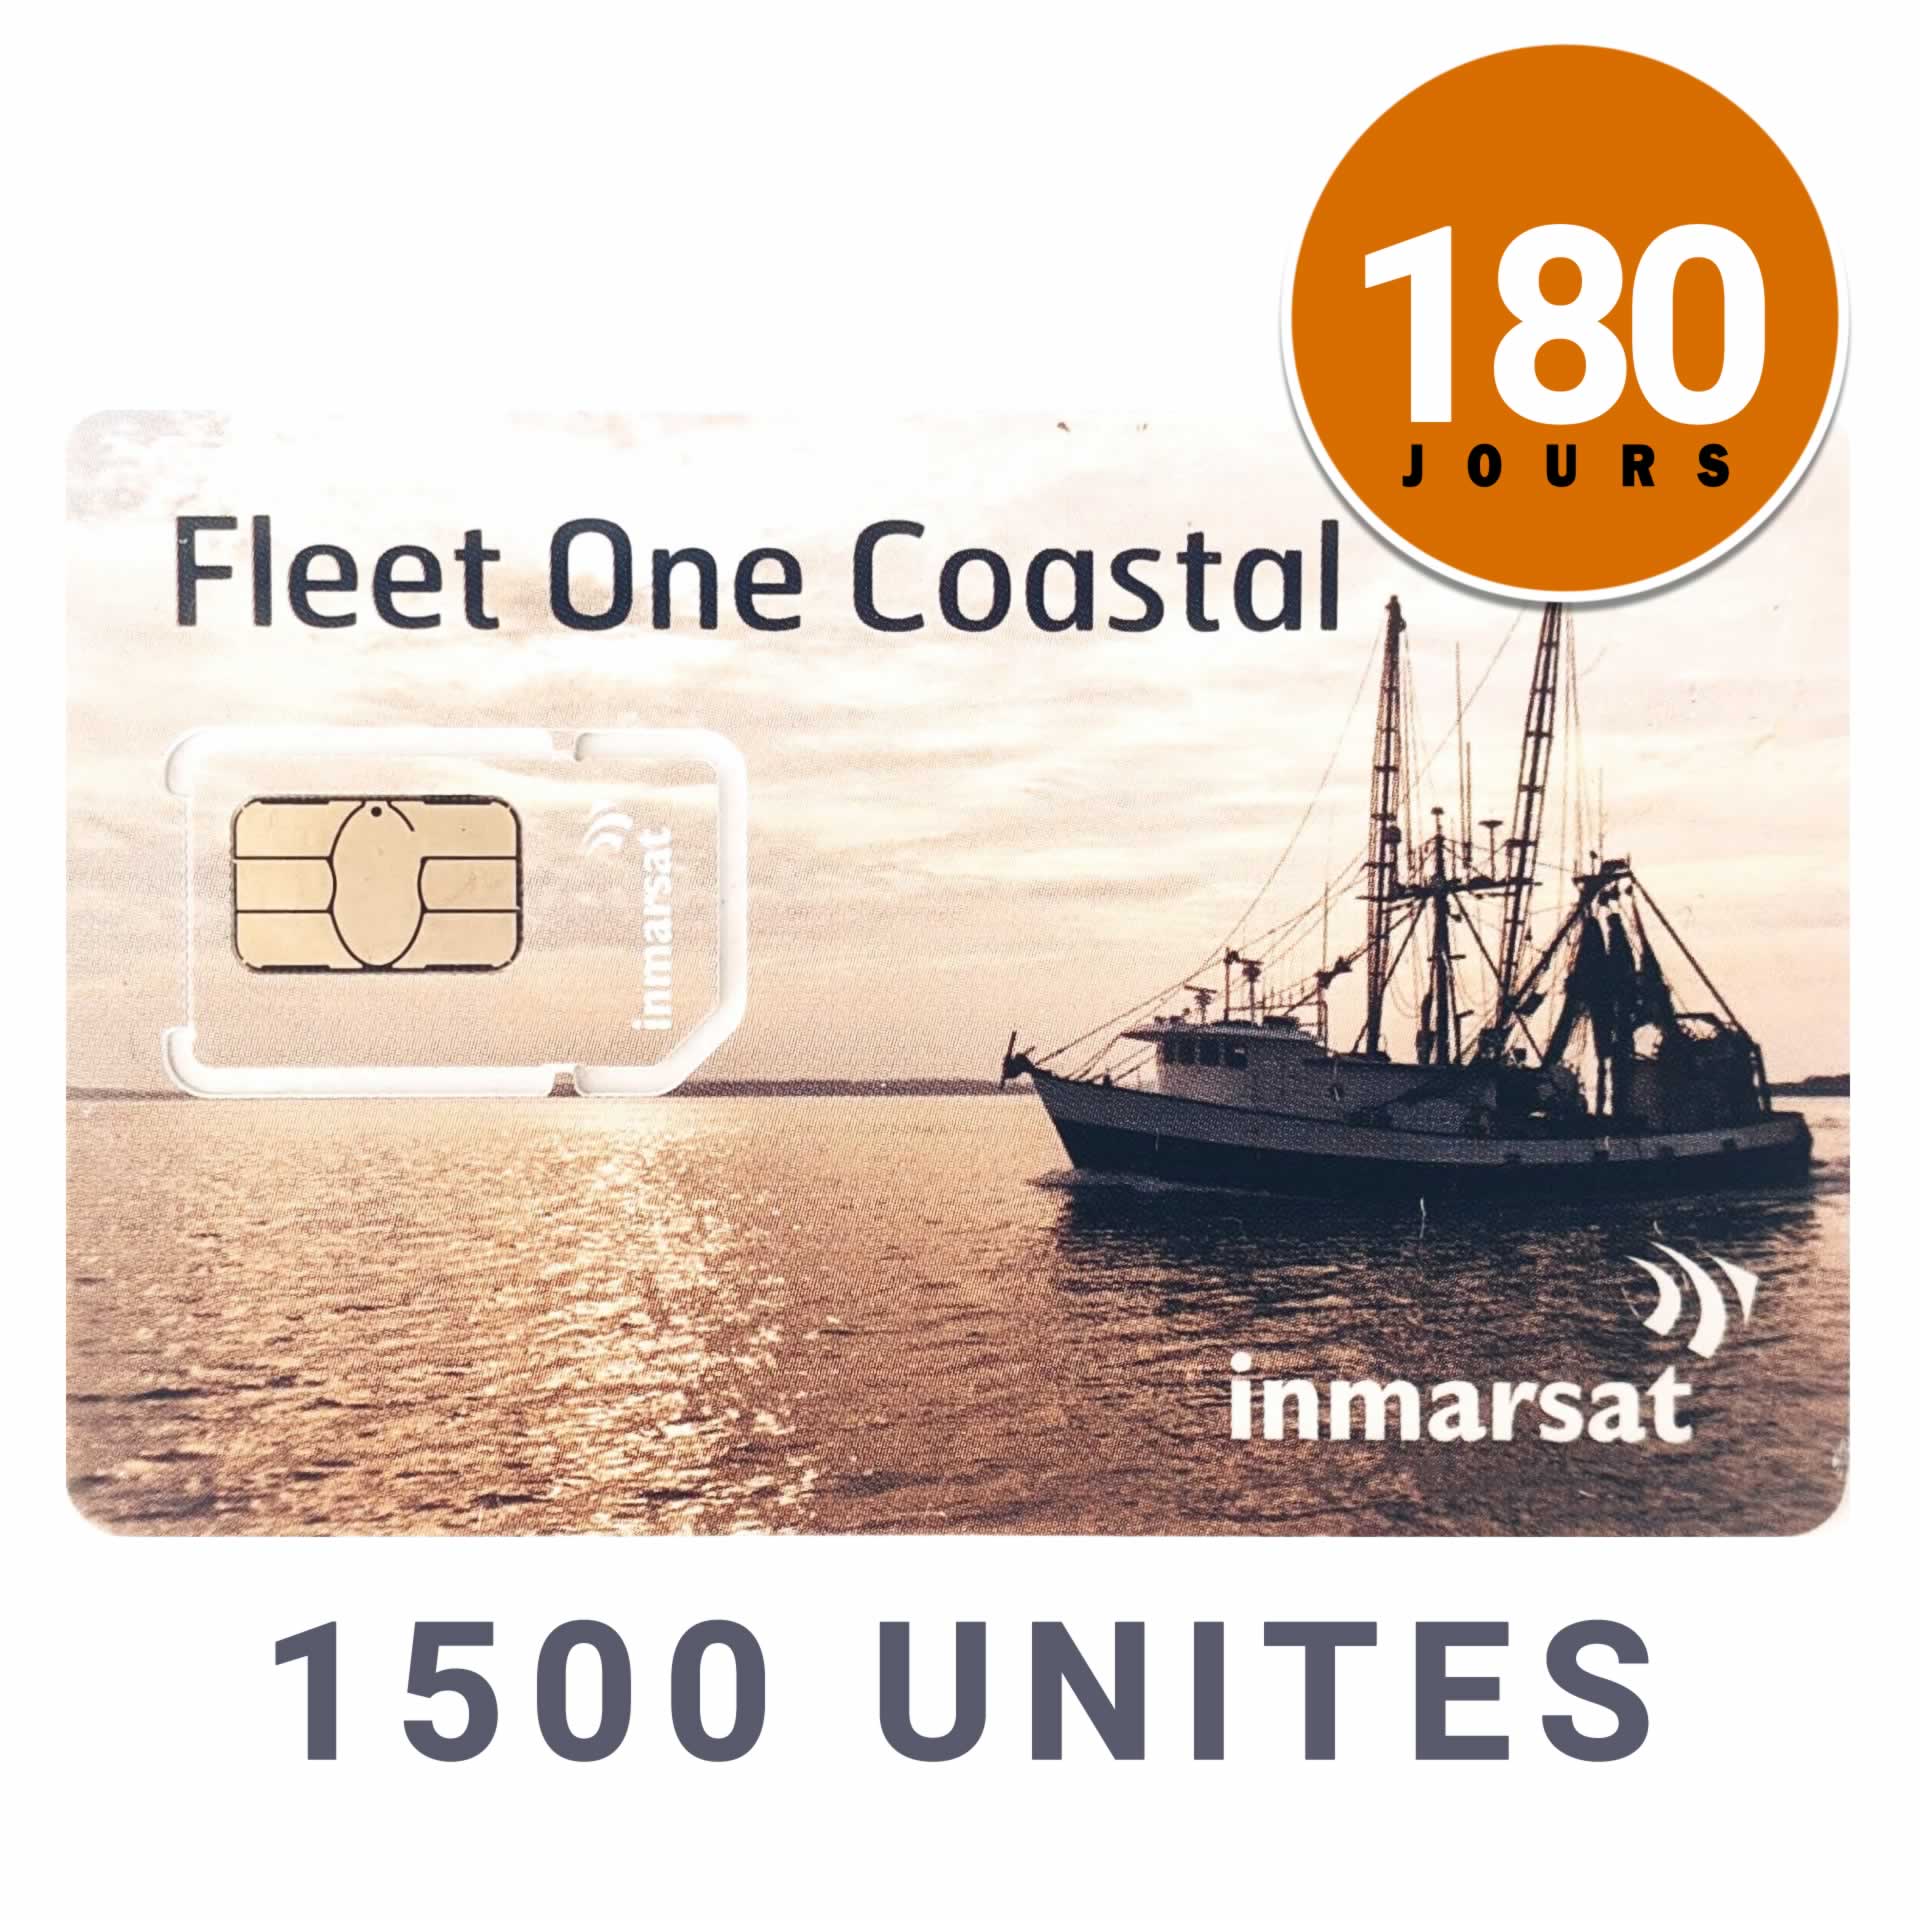 Carta prepagata INMARSAT Coast FLEET ONE ricaricabile - 1500 UNITA' - 180 GIORNI